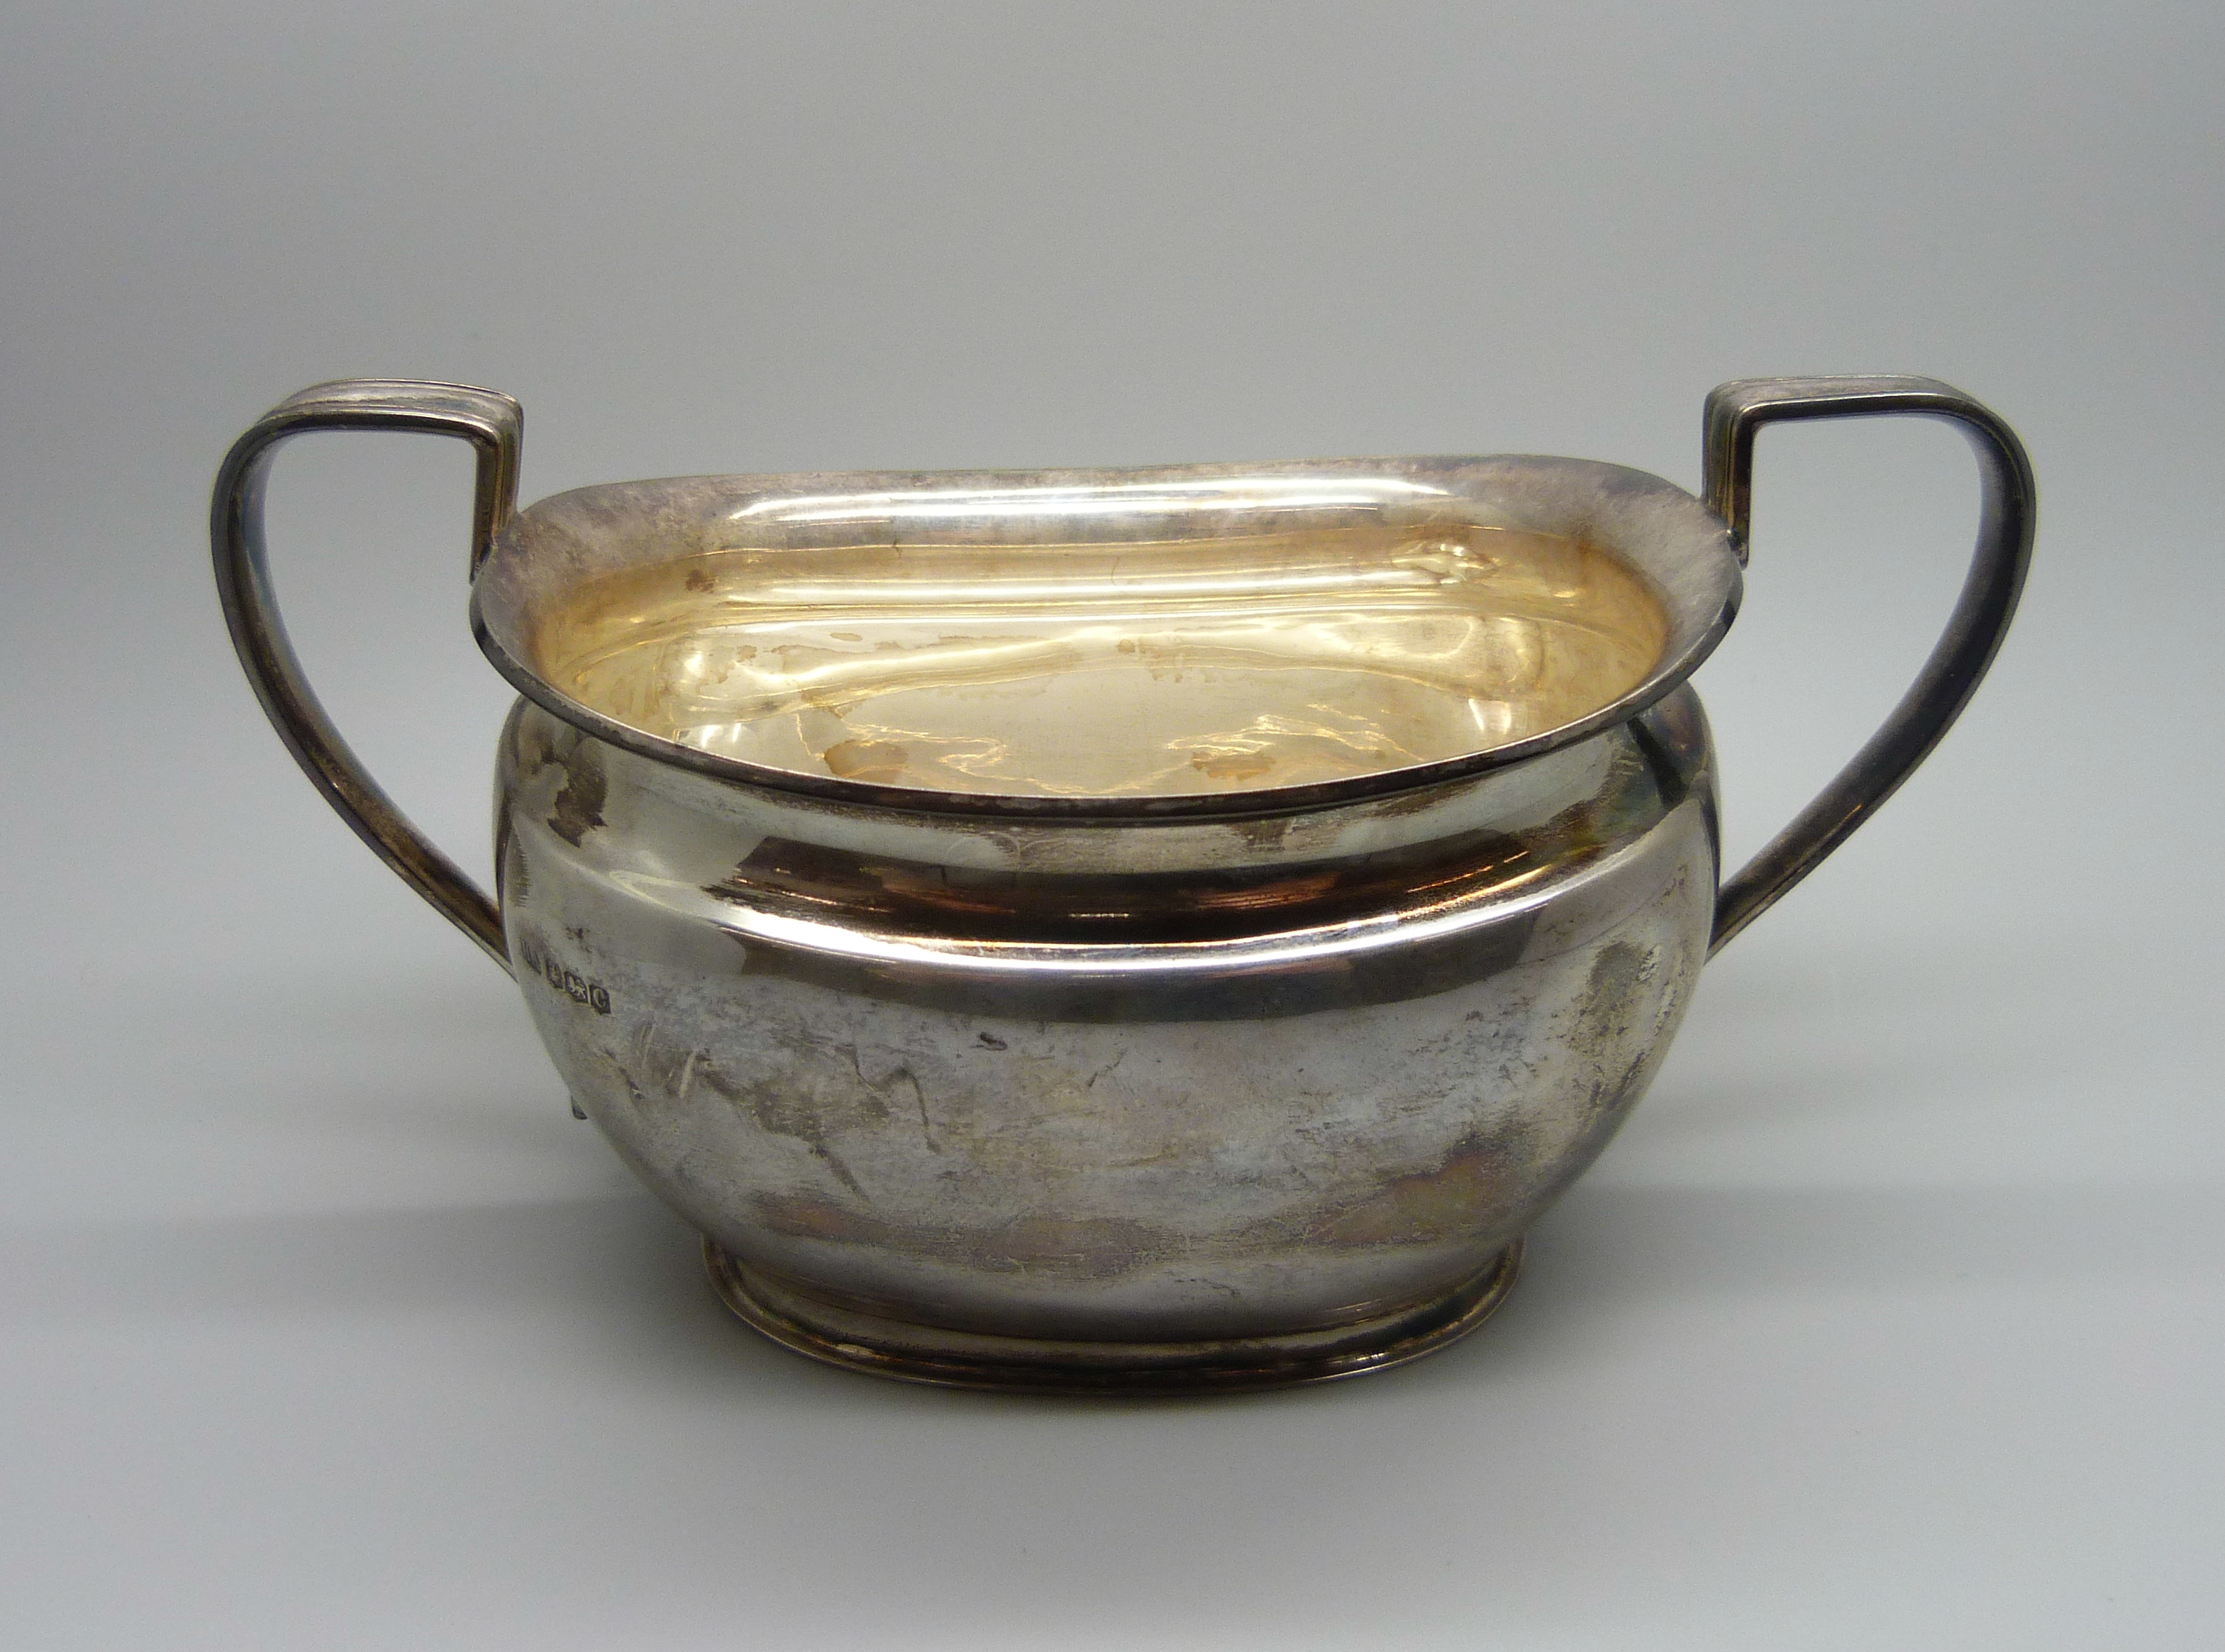 A silver sugar bowl, 256g